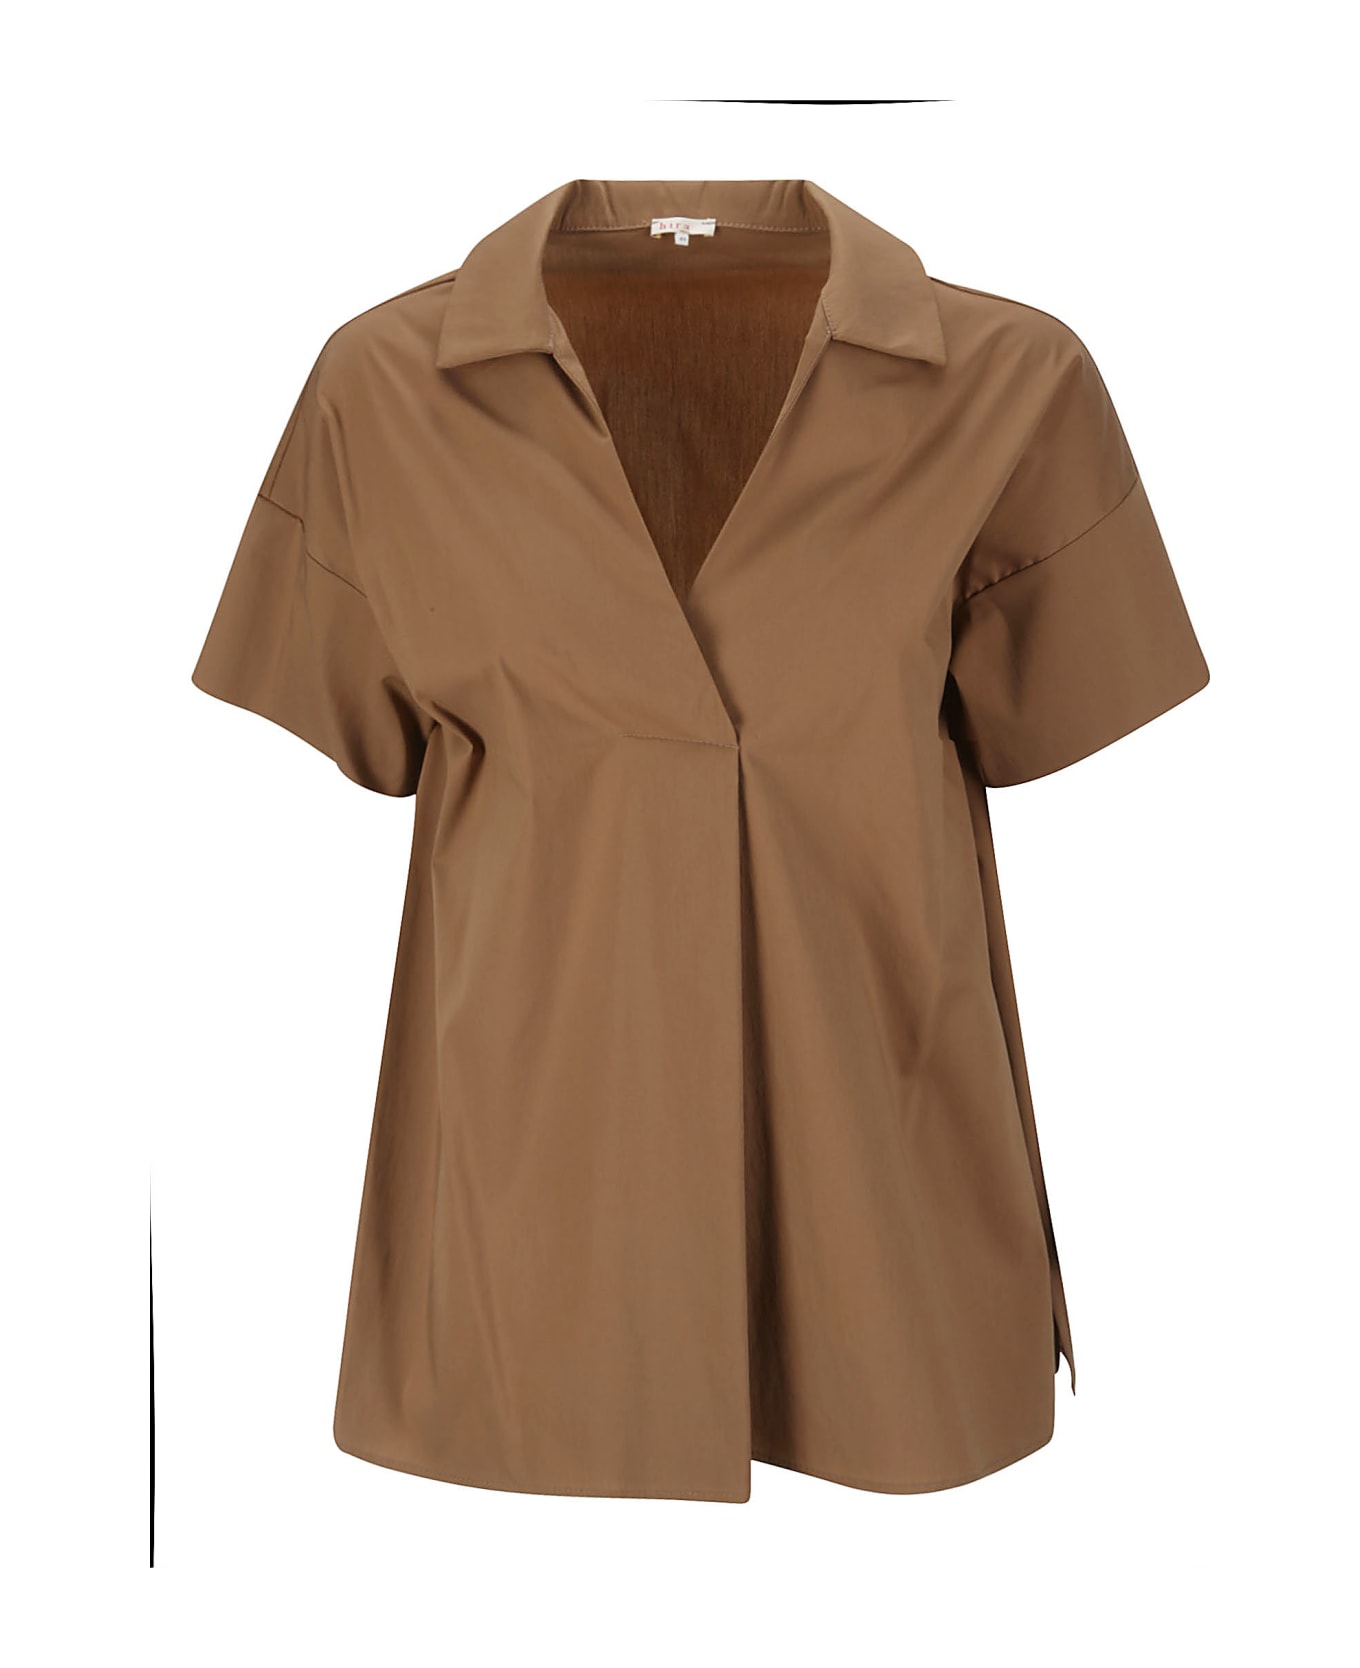 Hira Large Cotton Shirt Without Buttons - COGNAC